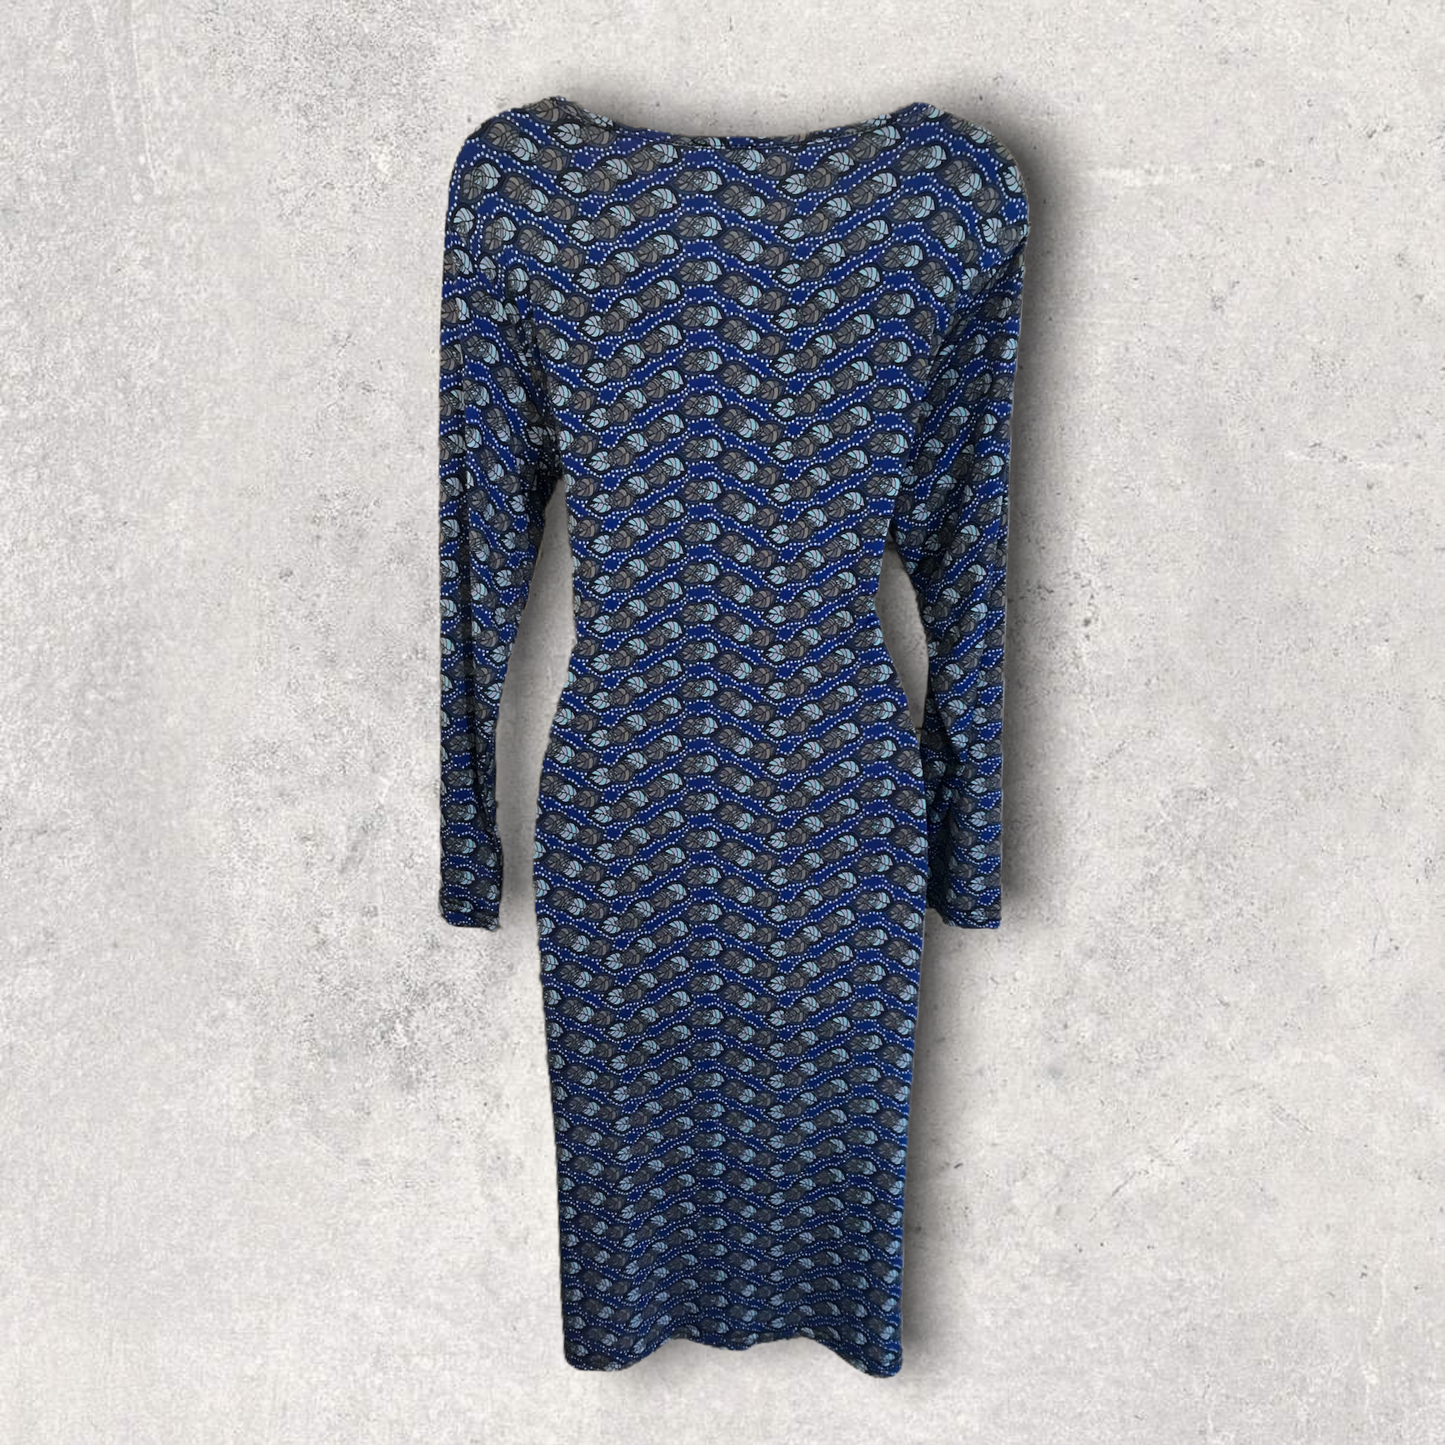 Ingenue Eve Blue Stretch Dress UK 16 US 12 EU 44 BNWT Timeless Fashions